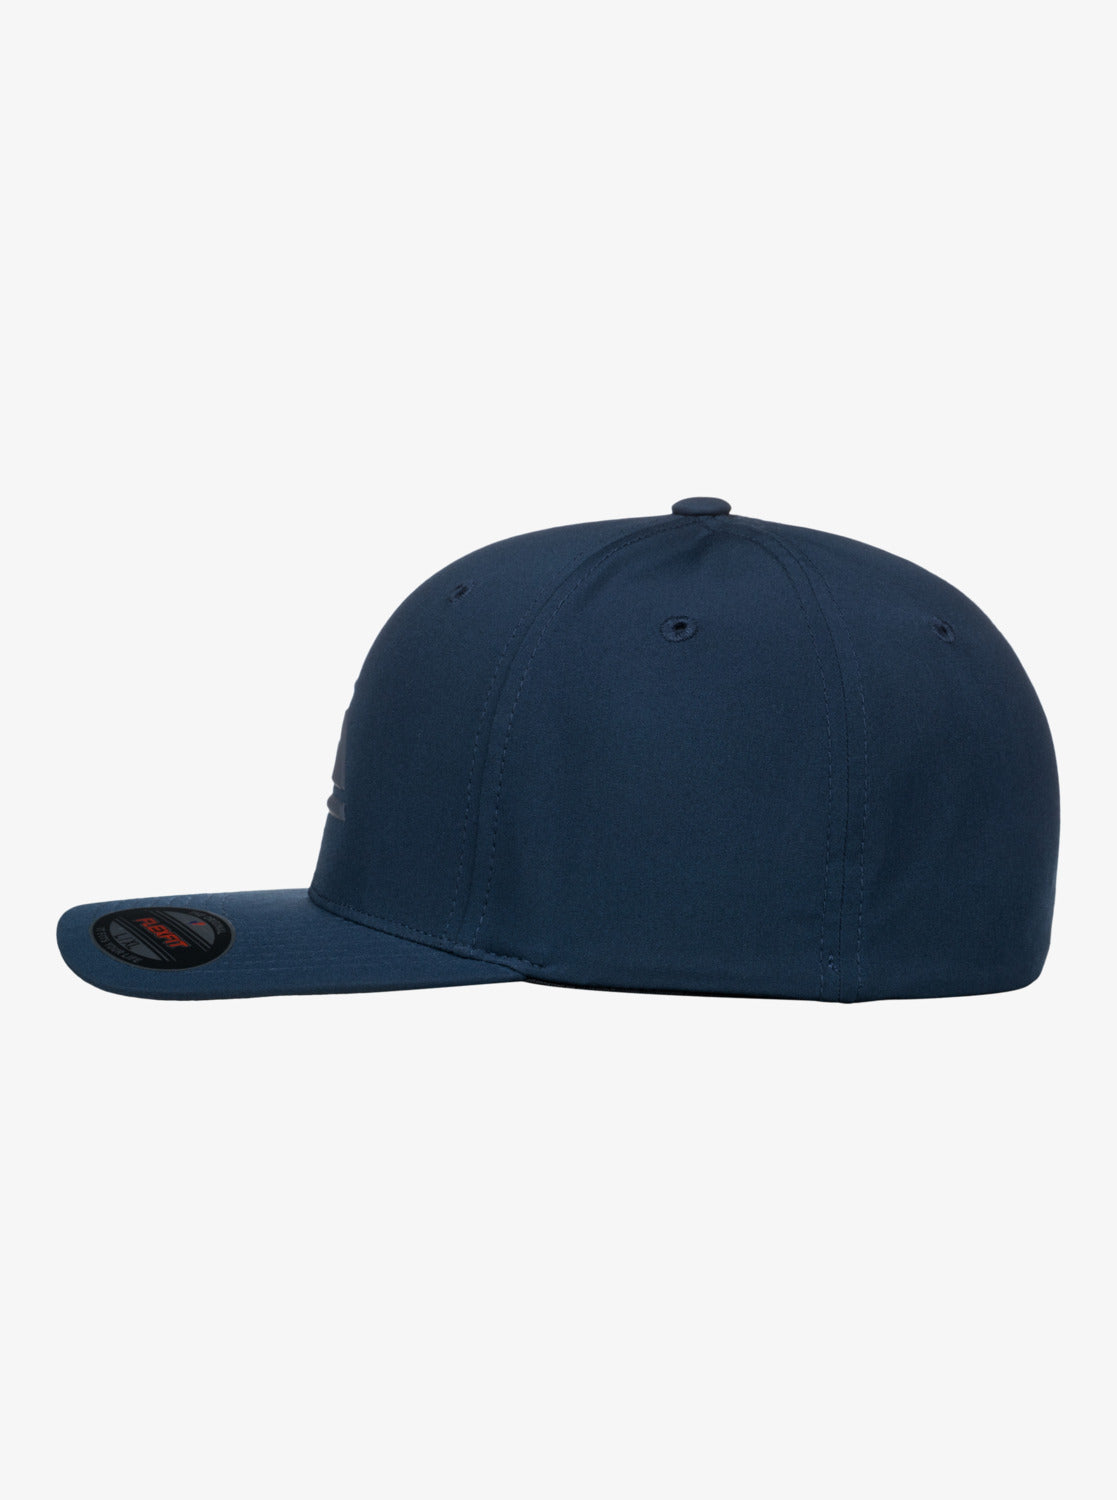 Amped Up Flexifit Hat - Navy Blazer